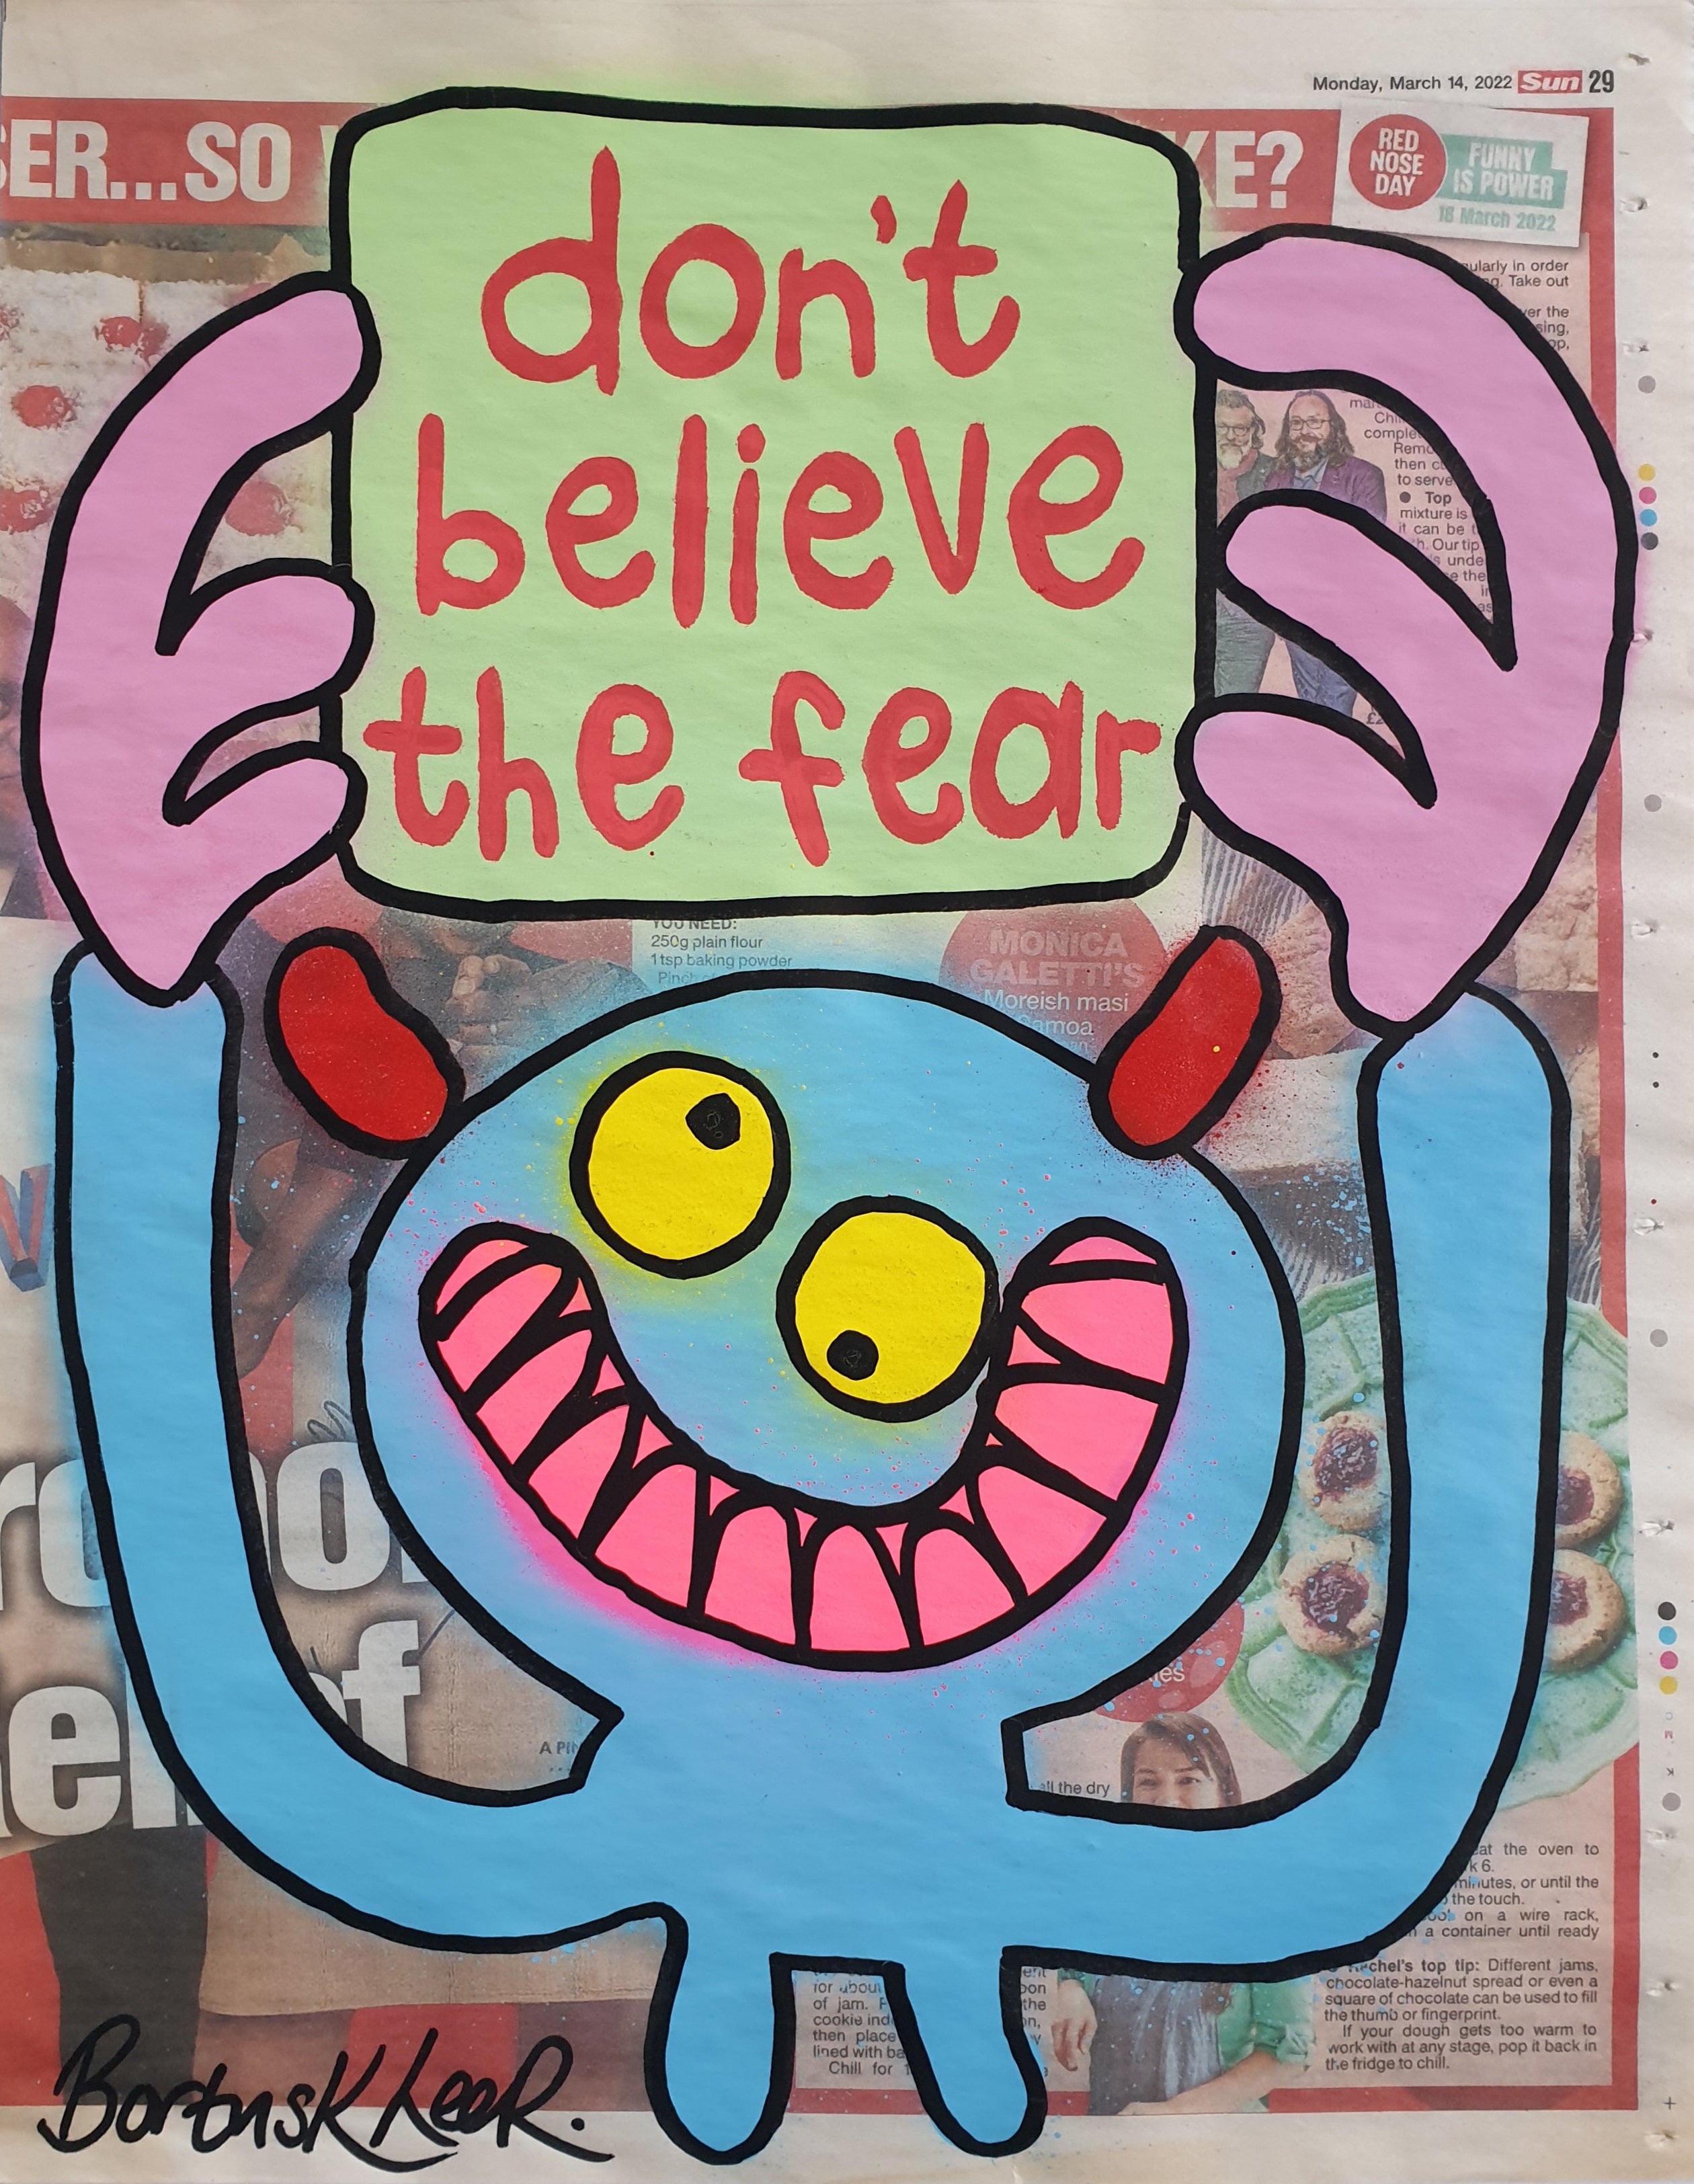 Don't believe the fear